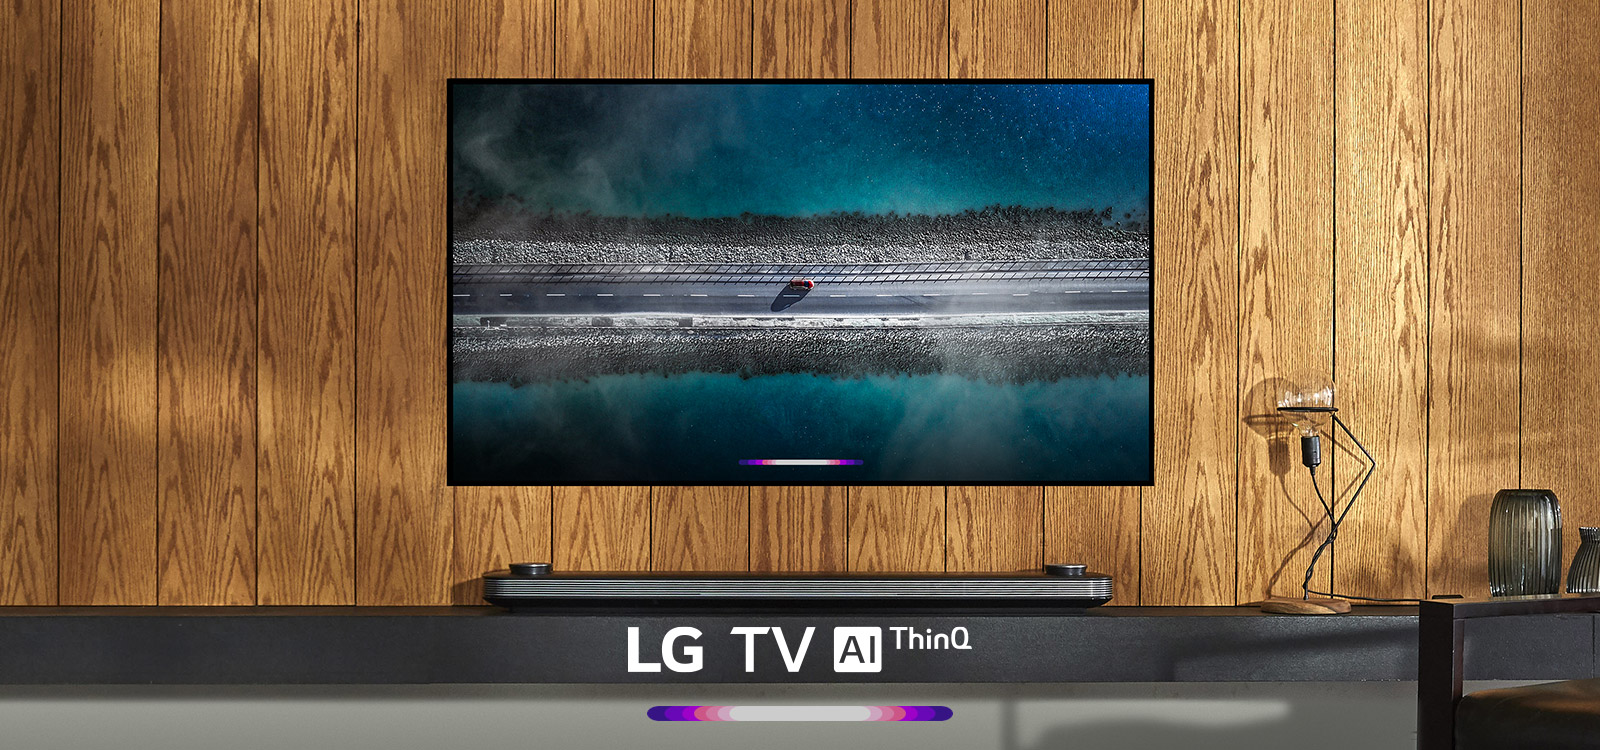 LG TV OLED C9 77 - Torino